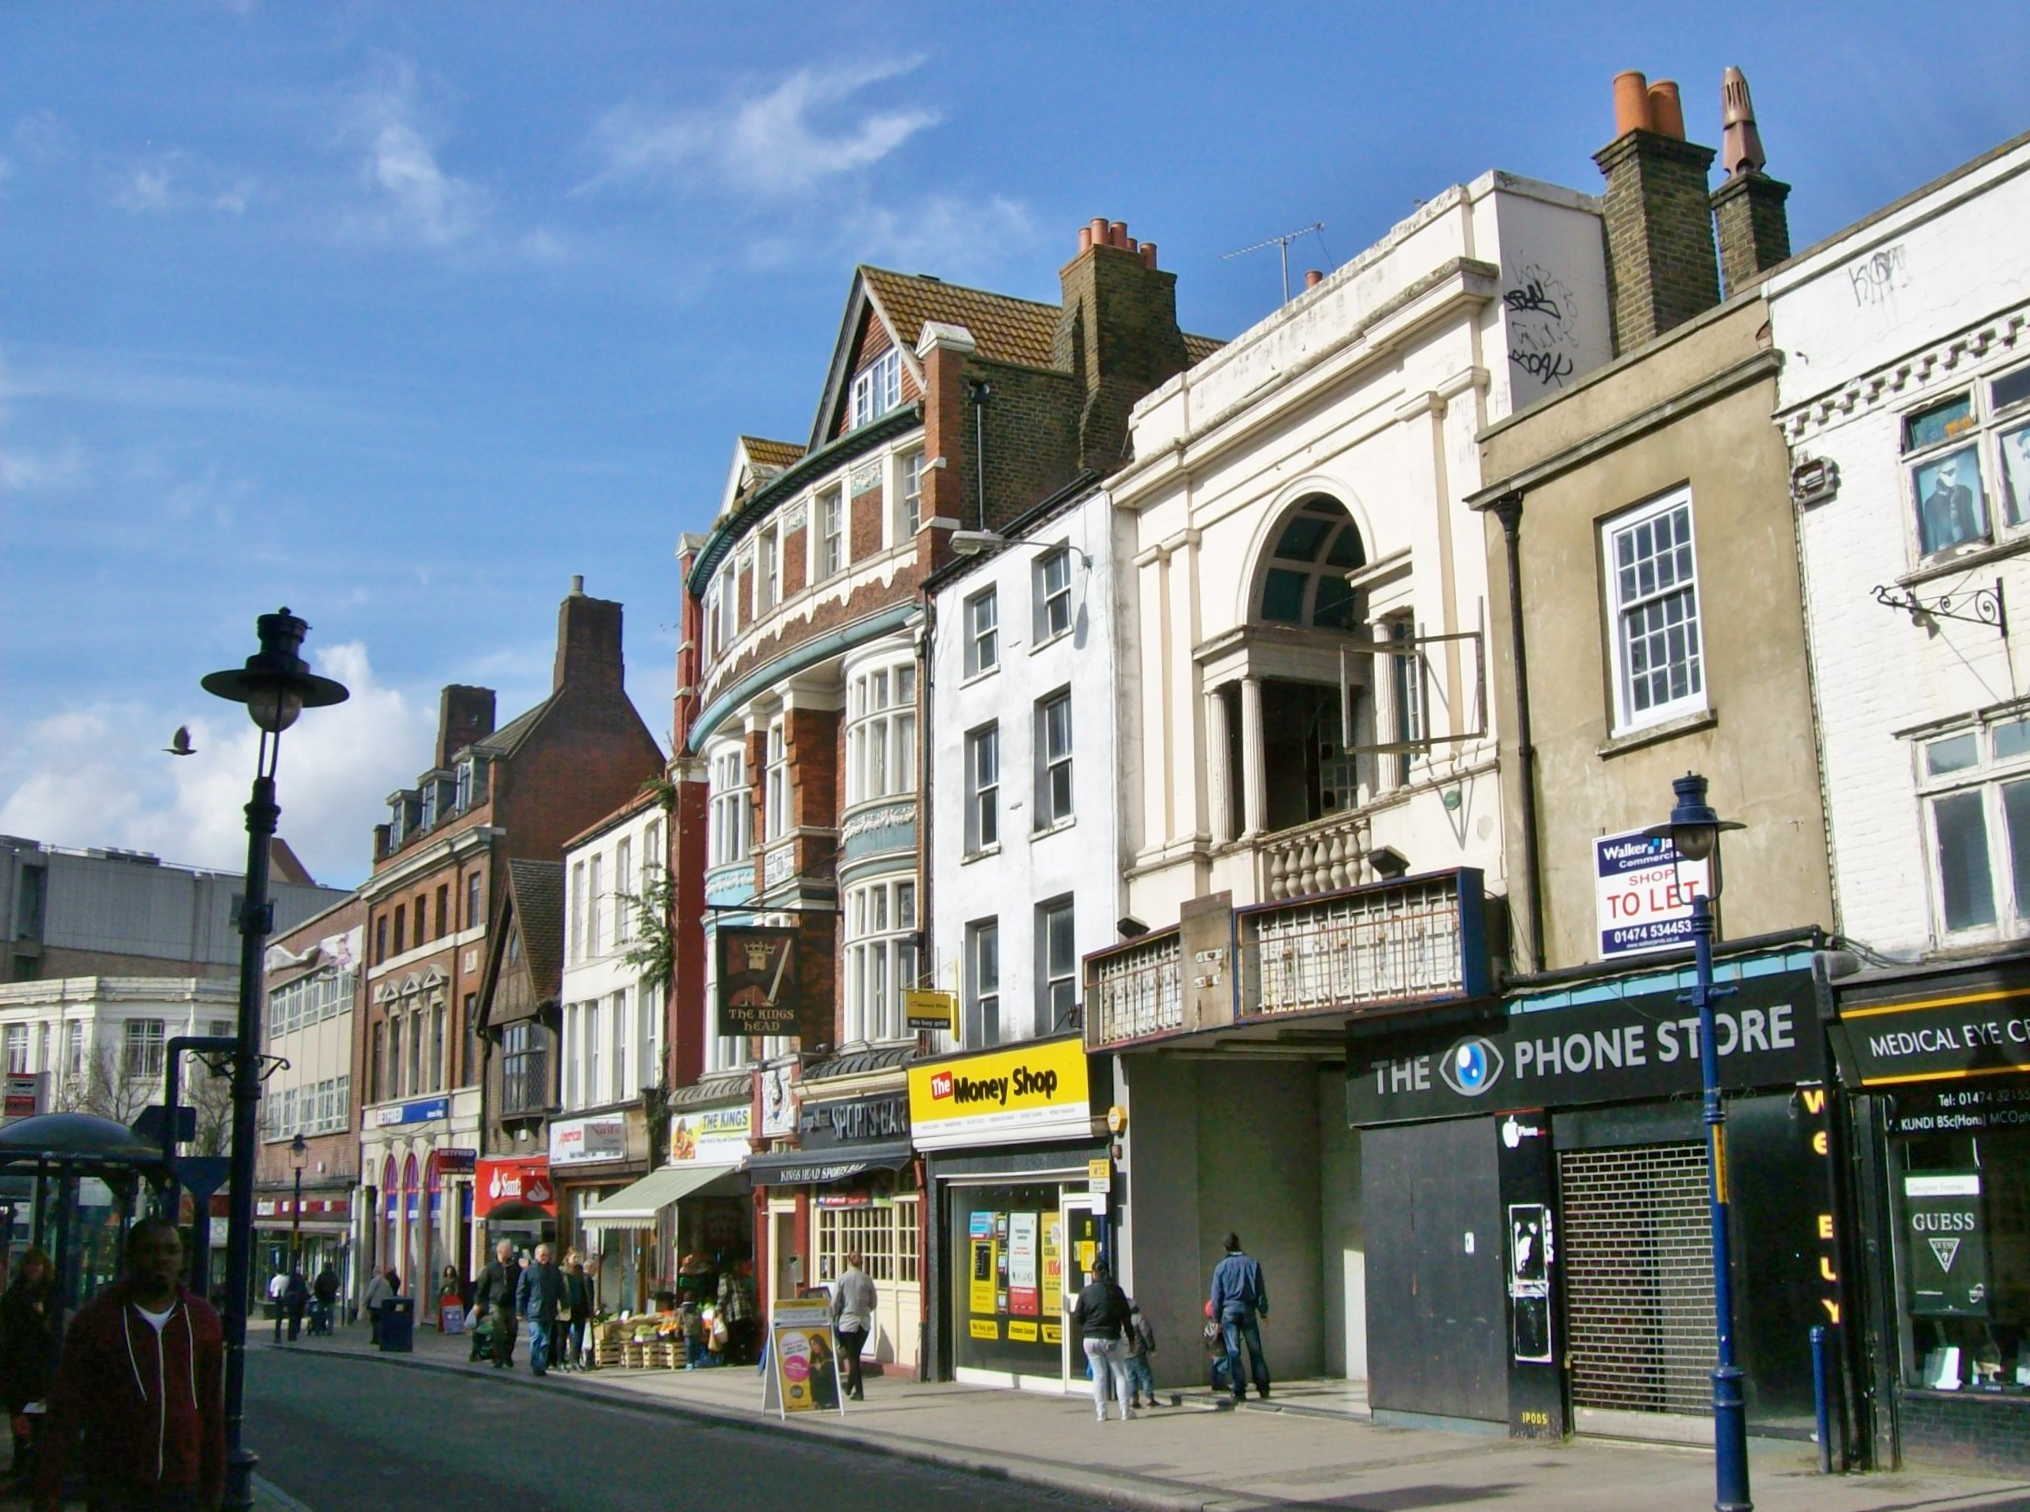 Gravesend high street